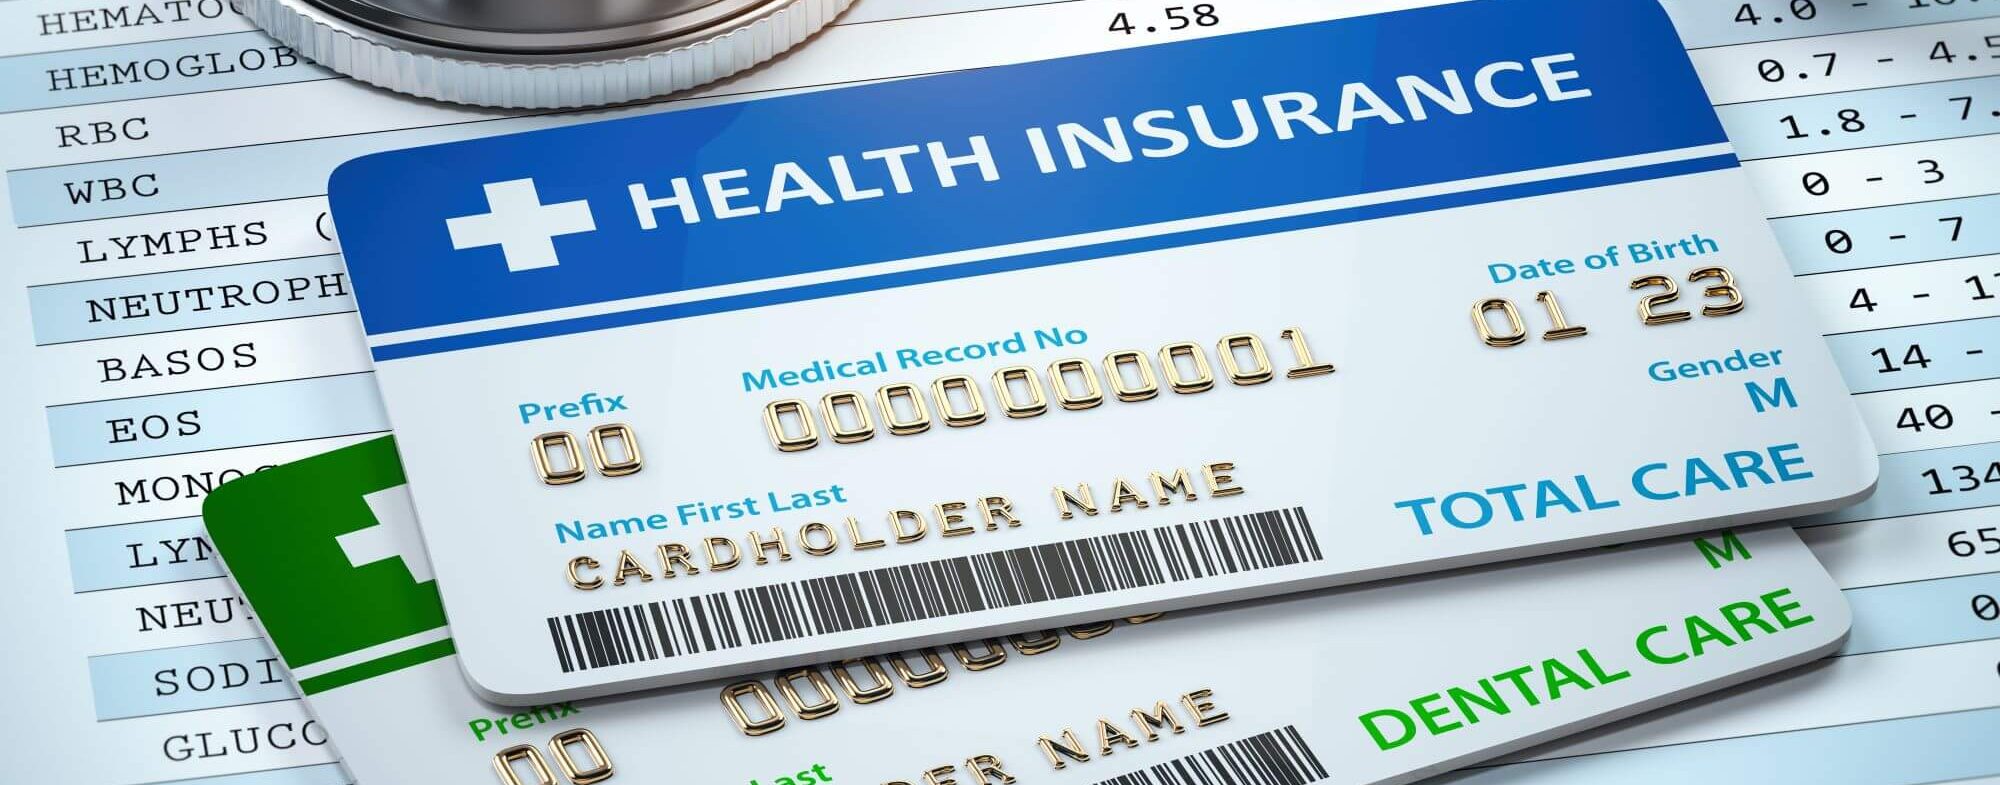 Health Insurance Card